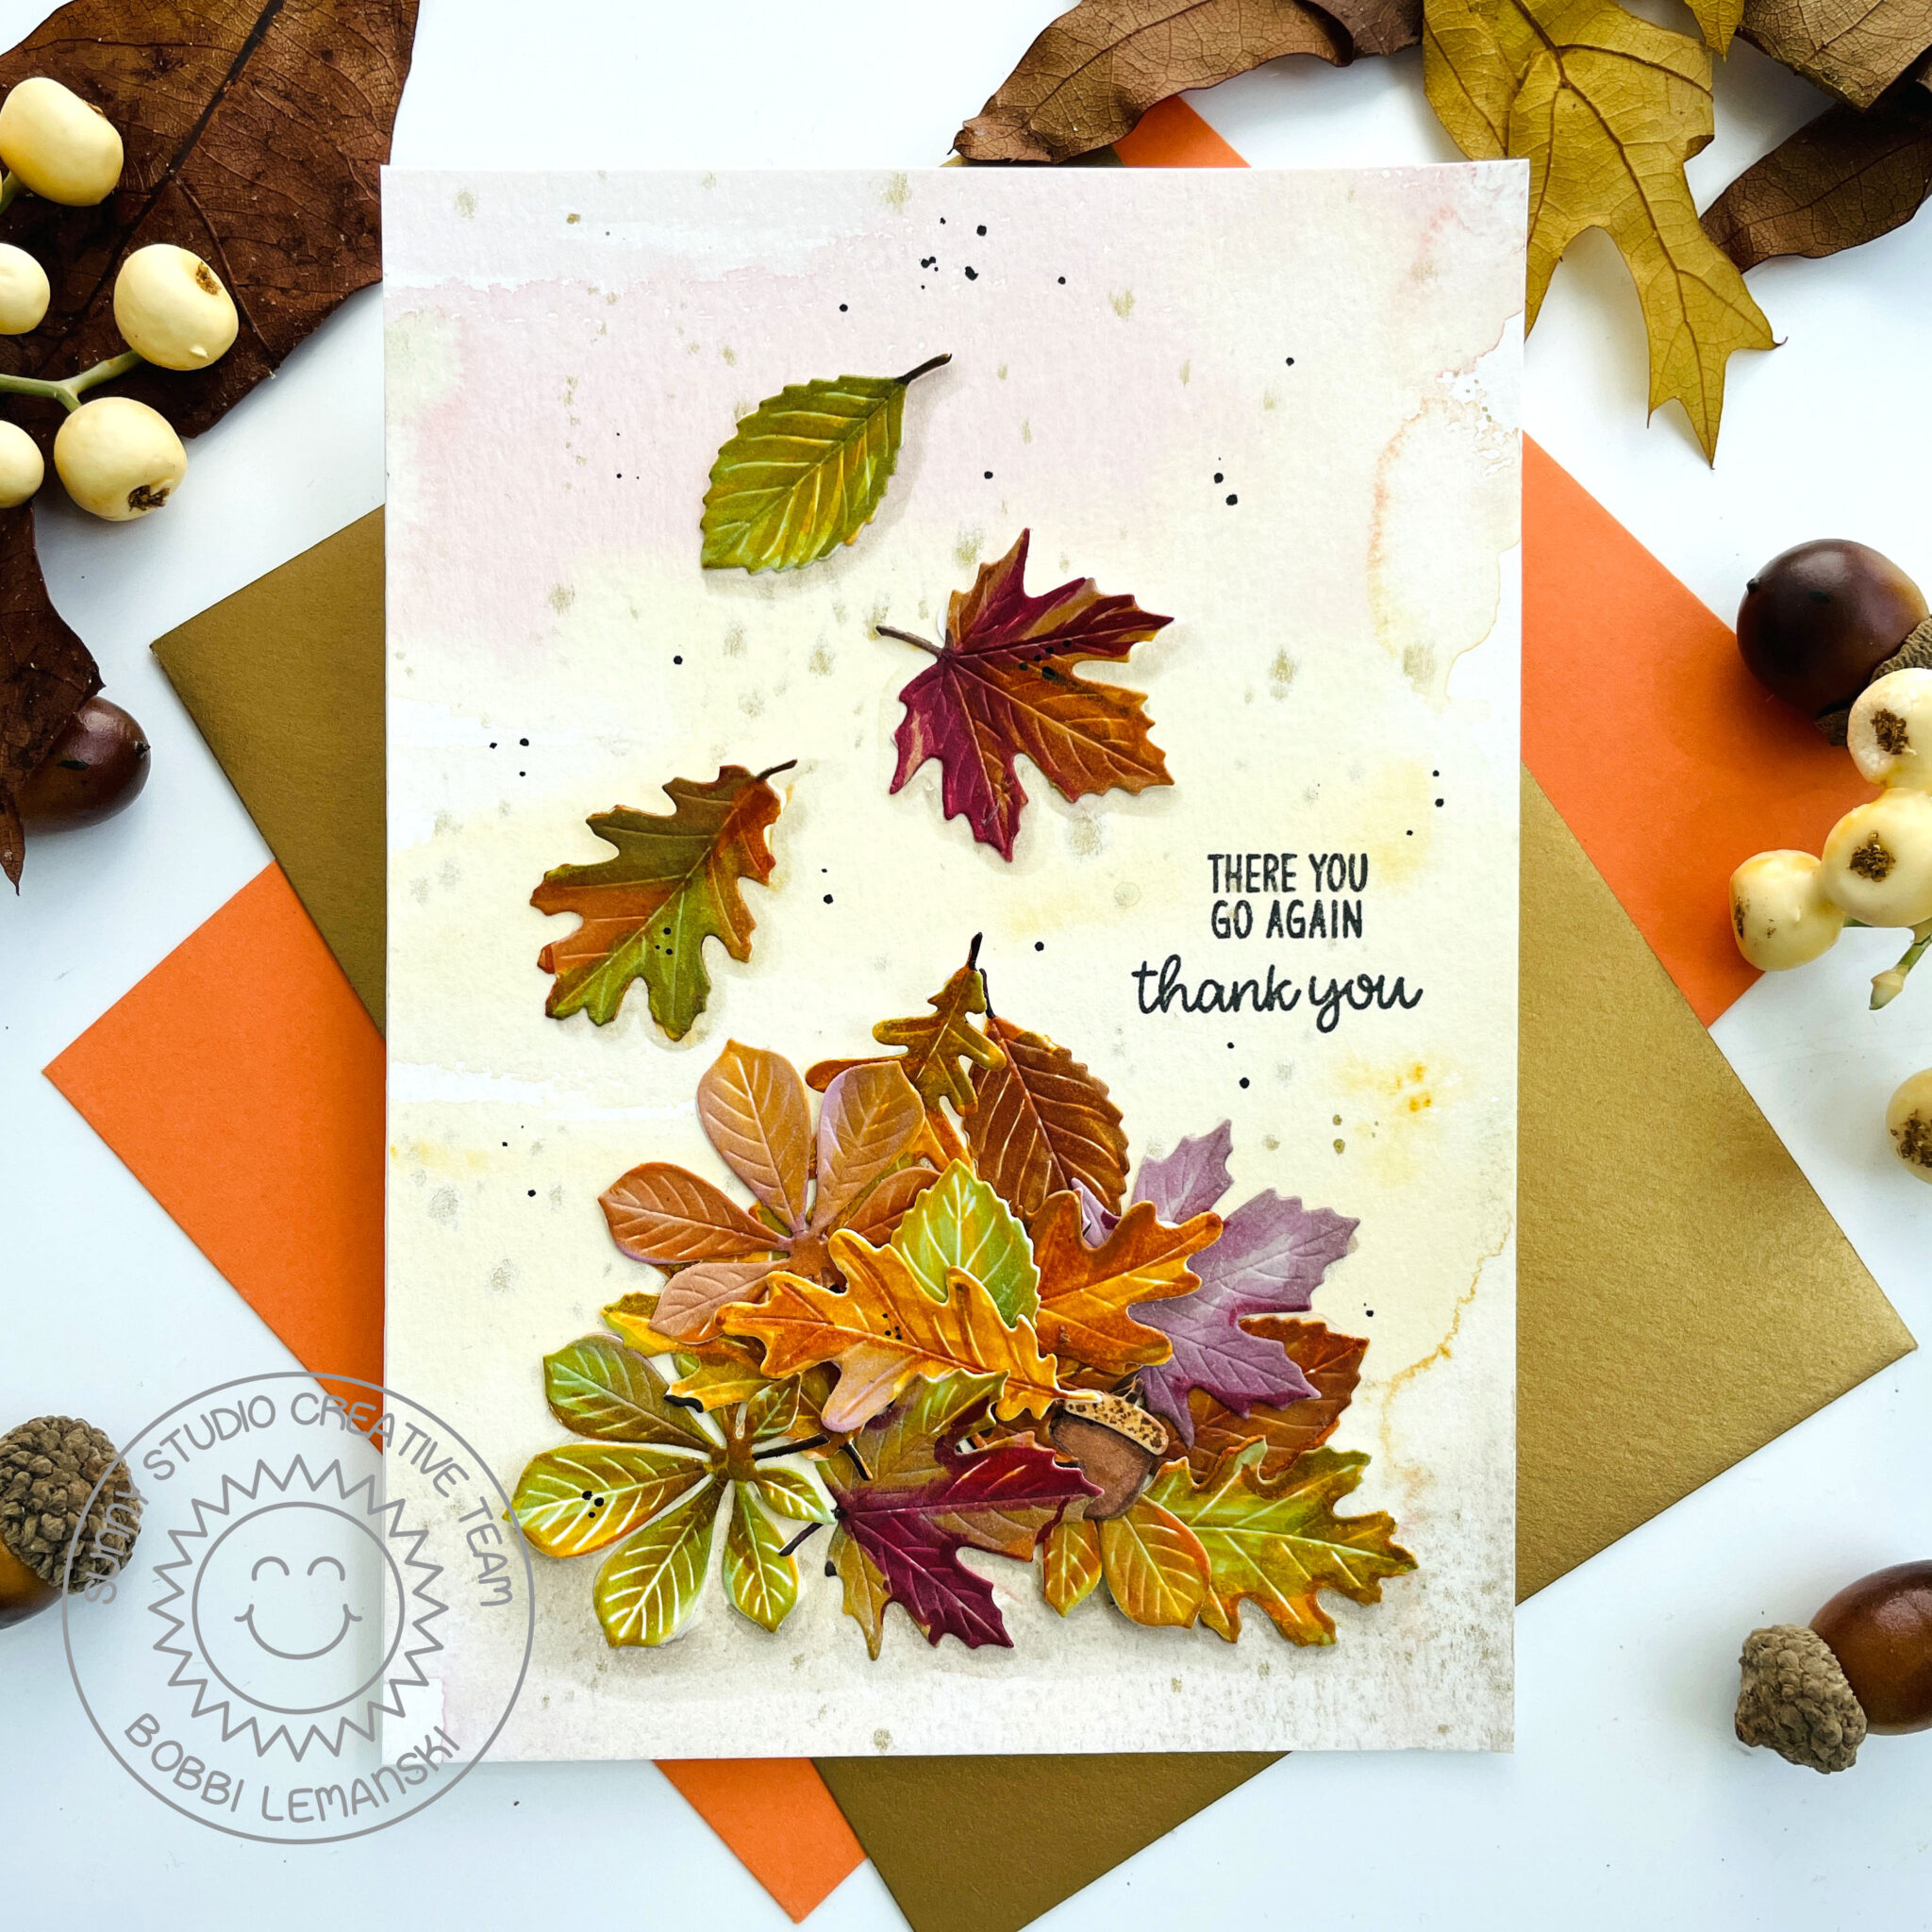 Leaf Pile with Autumn Greenery | Bobbi Hart♡Design